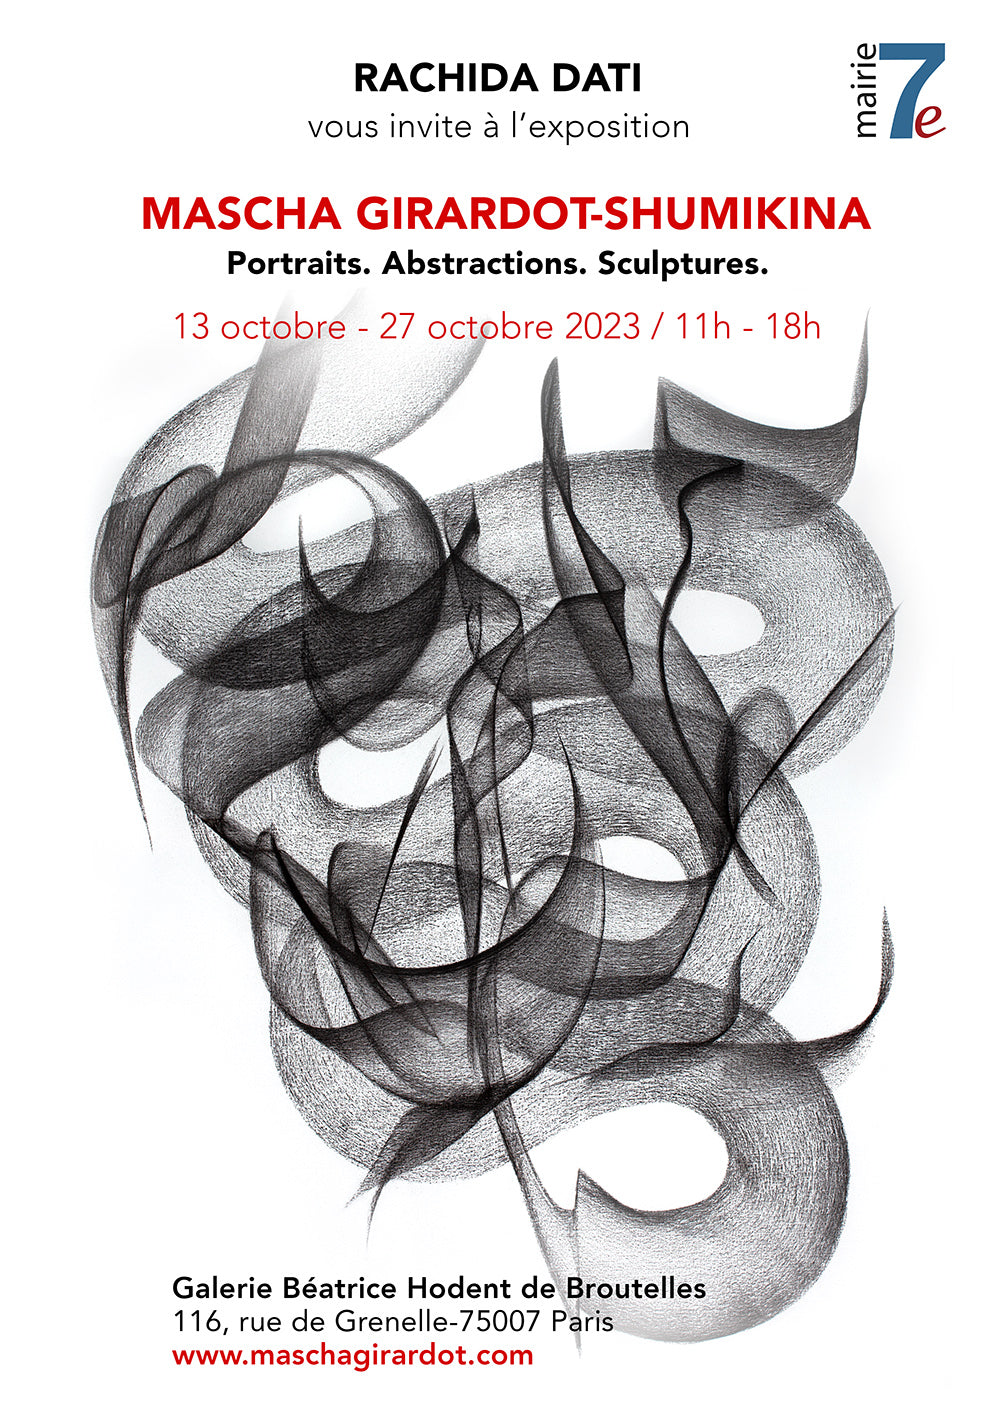 Mascha Girardot-Shumukina Exposition